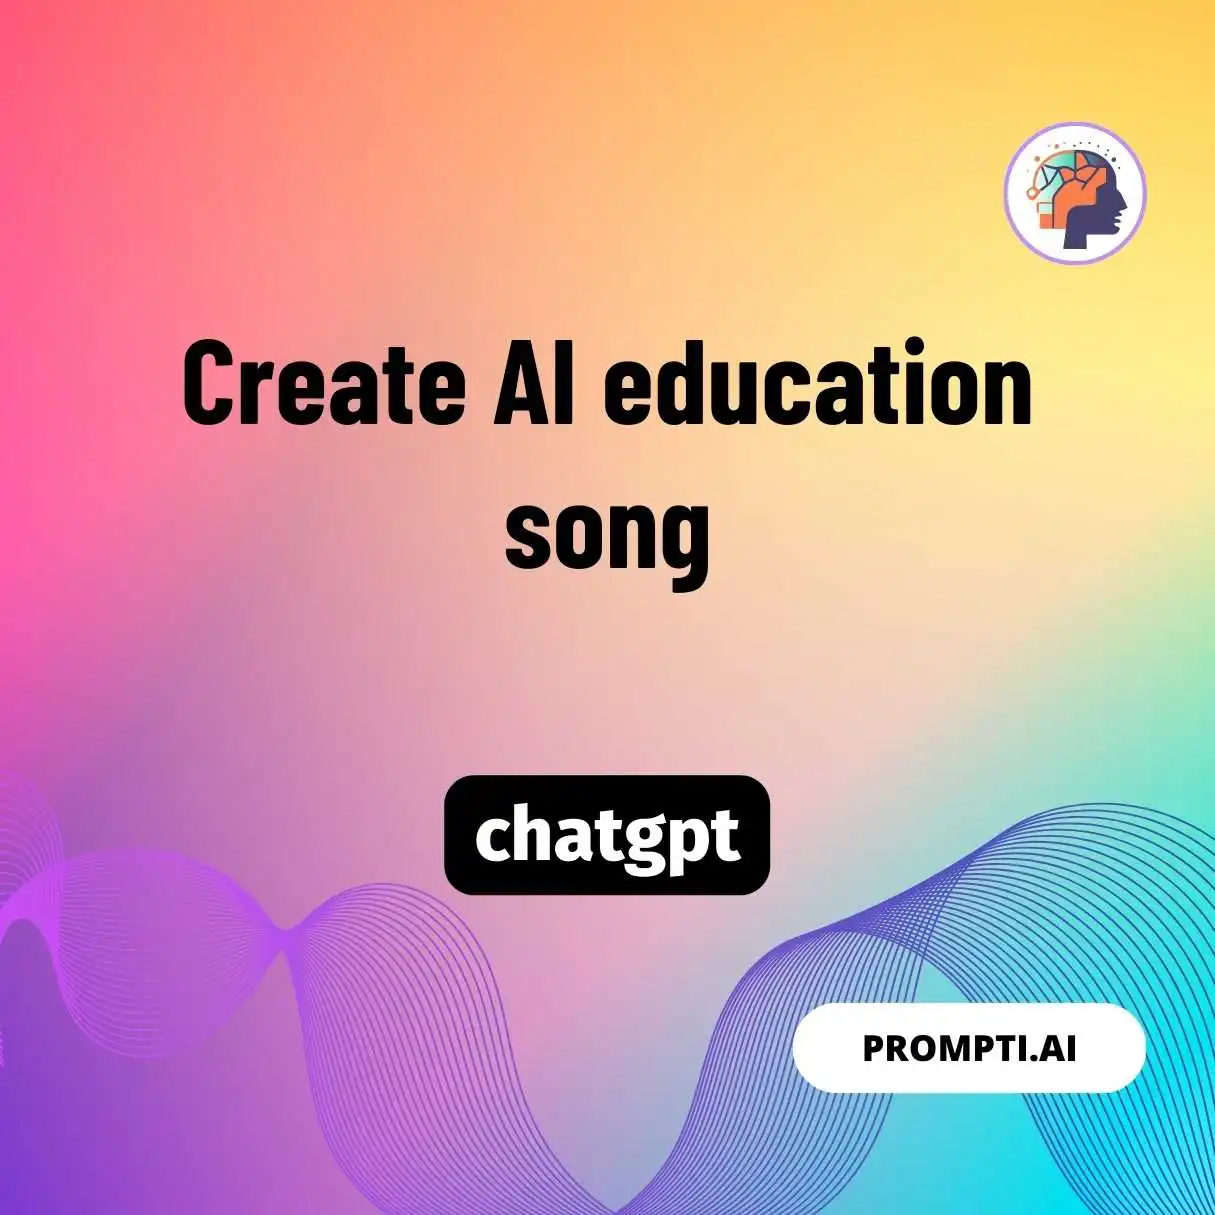 Create AI education song